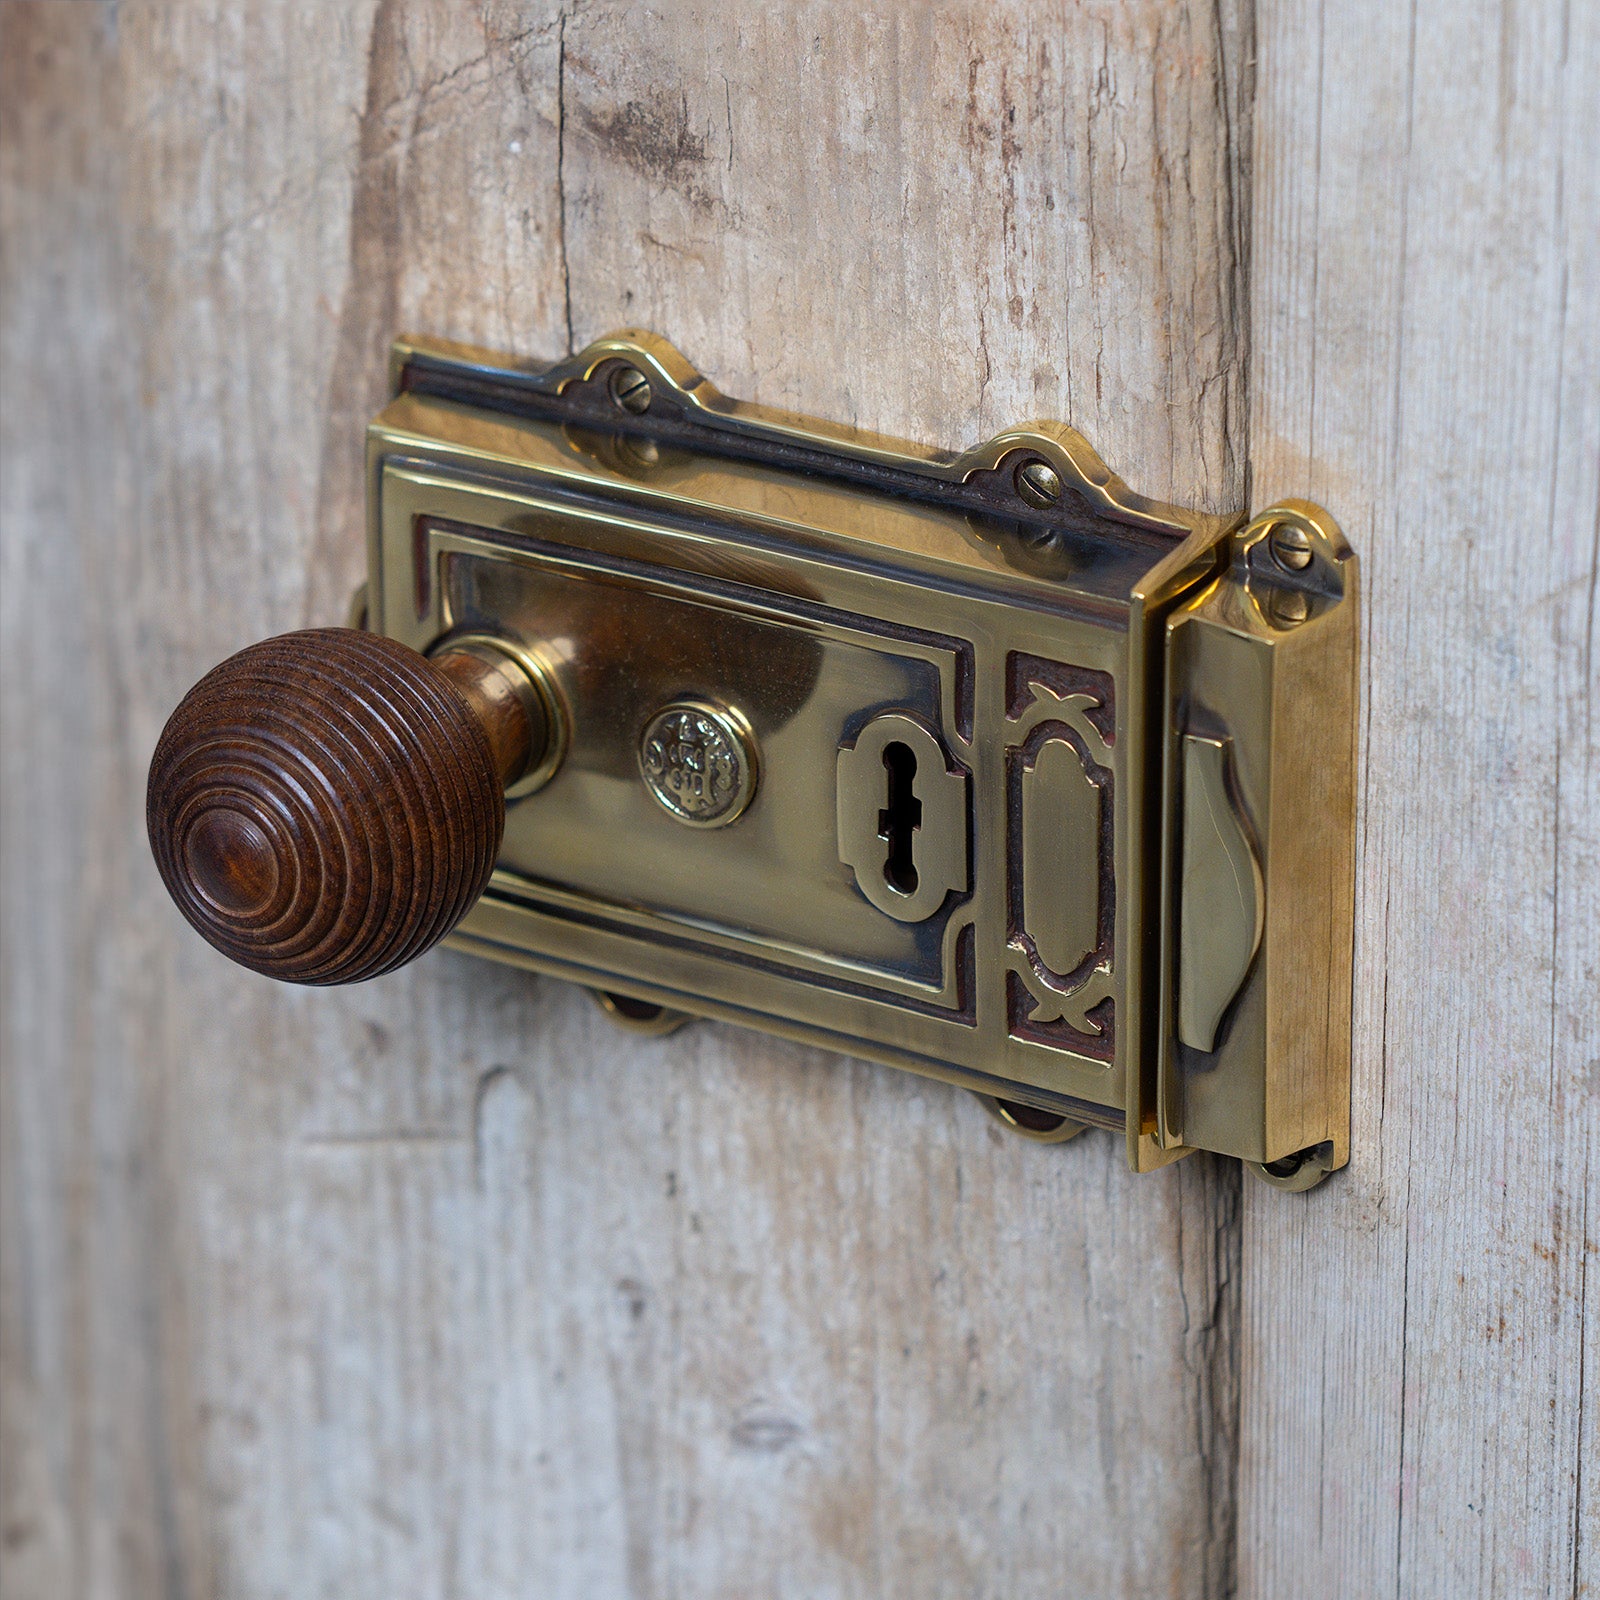 SHOW Lifestyle image of Ornate Antique Brass Rim Lock on wood